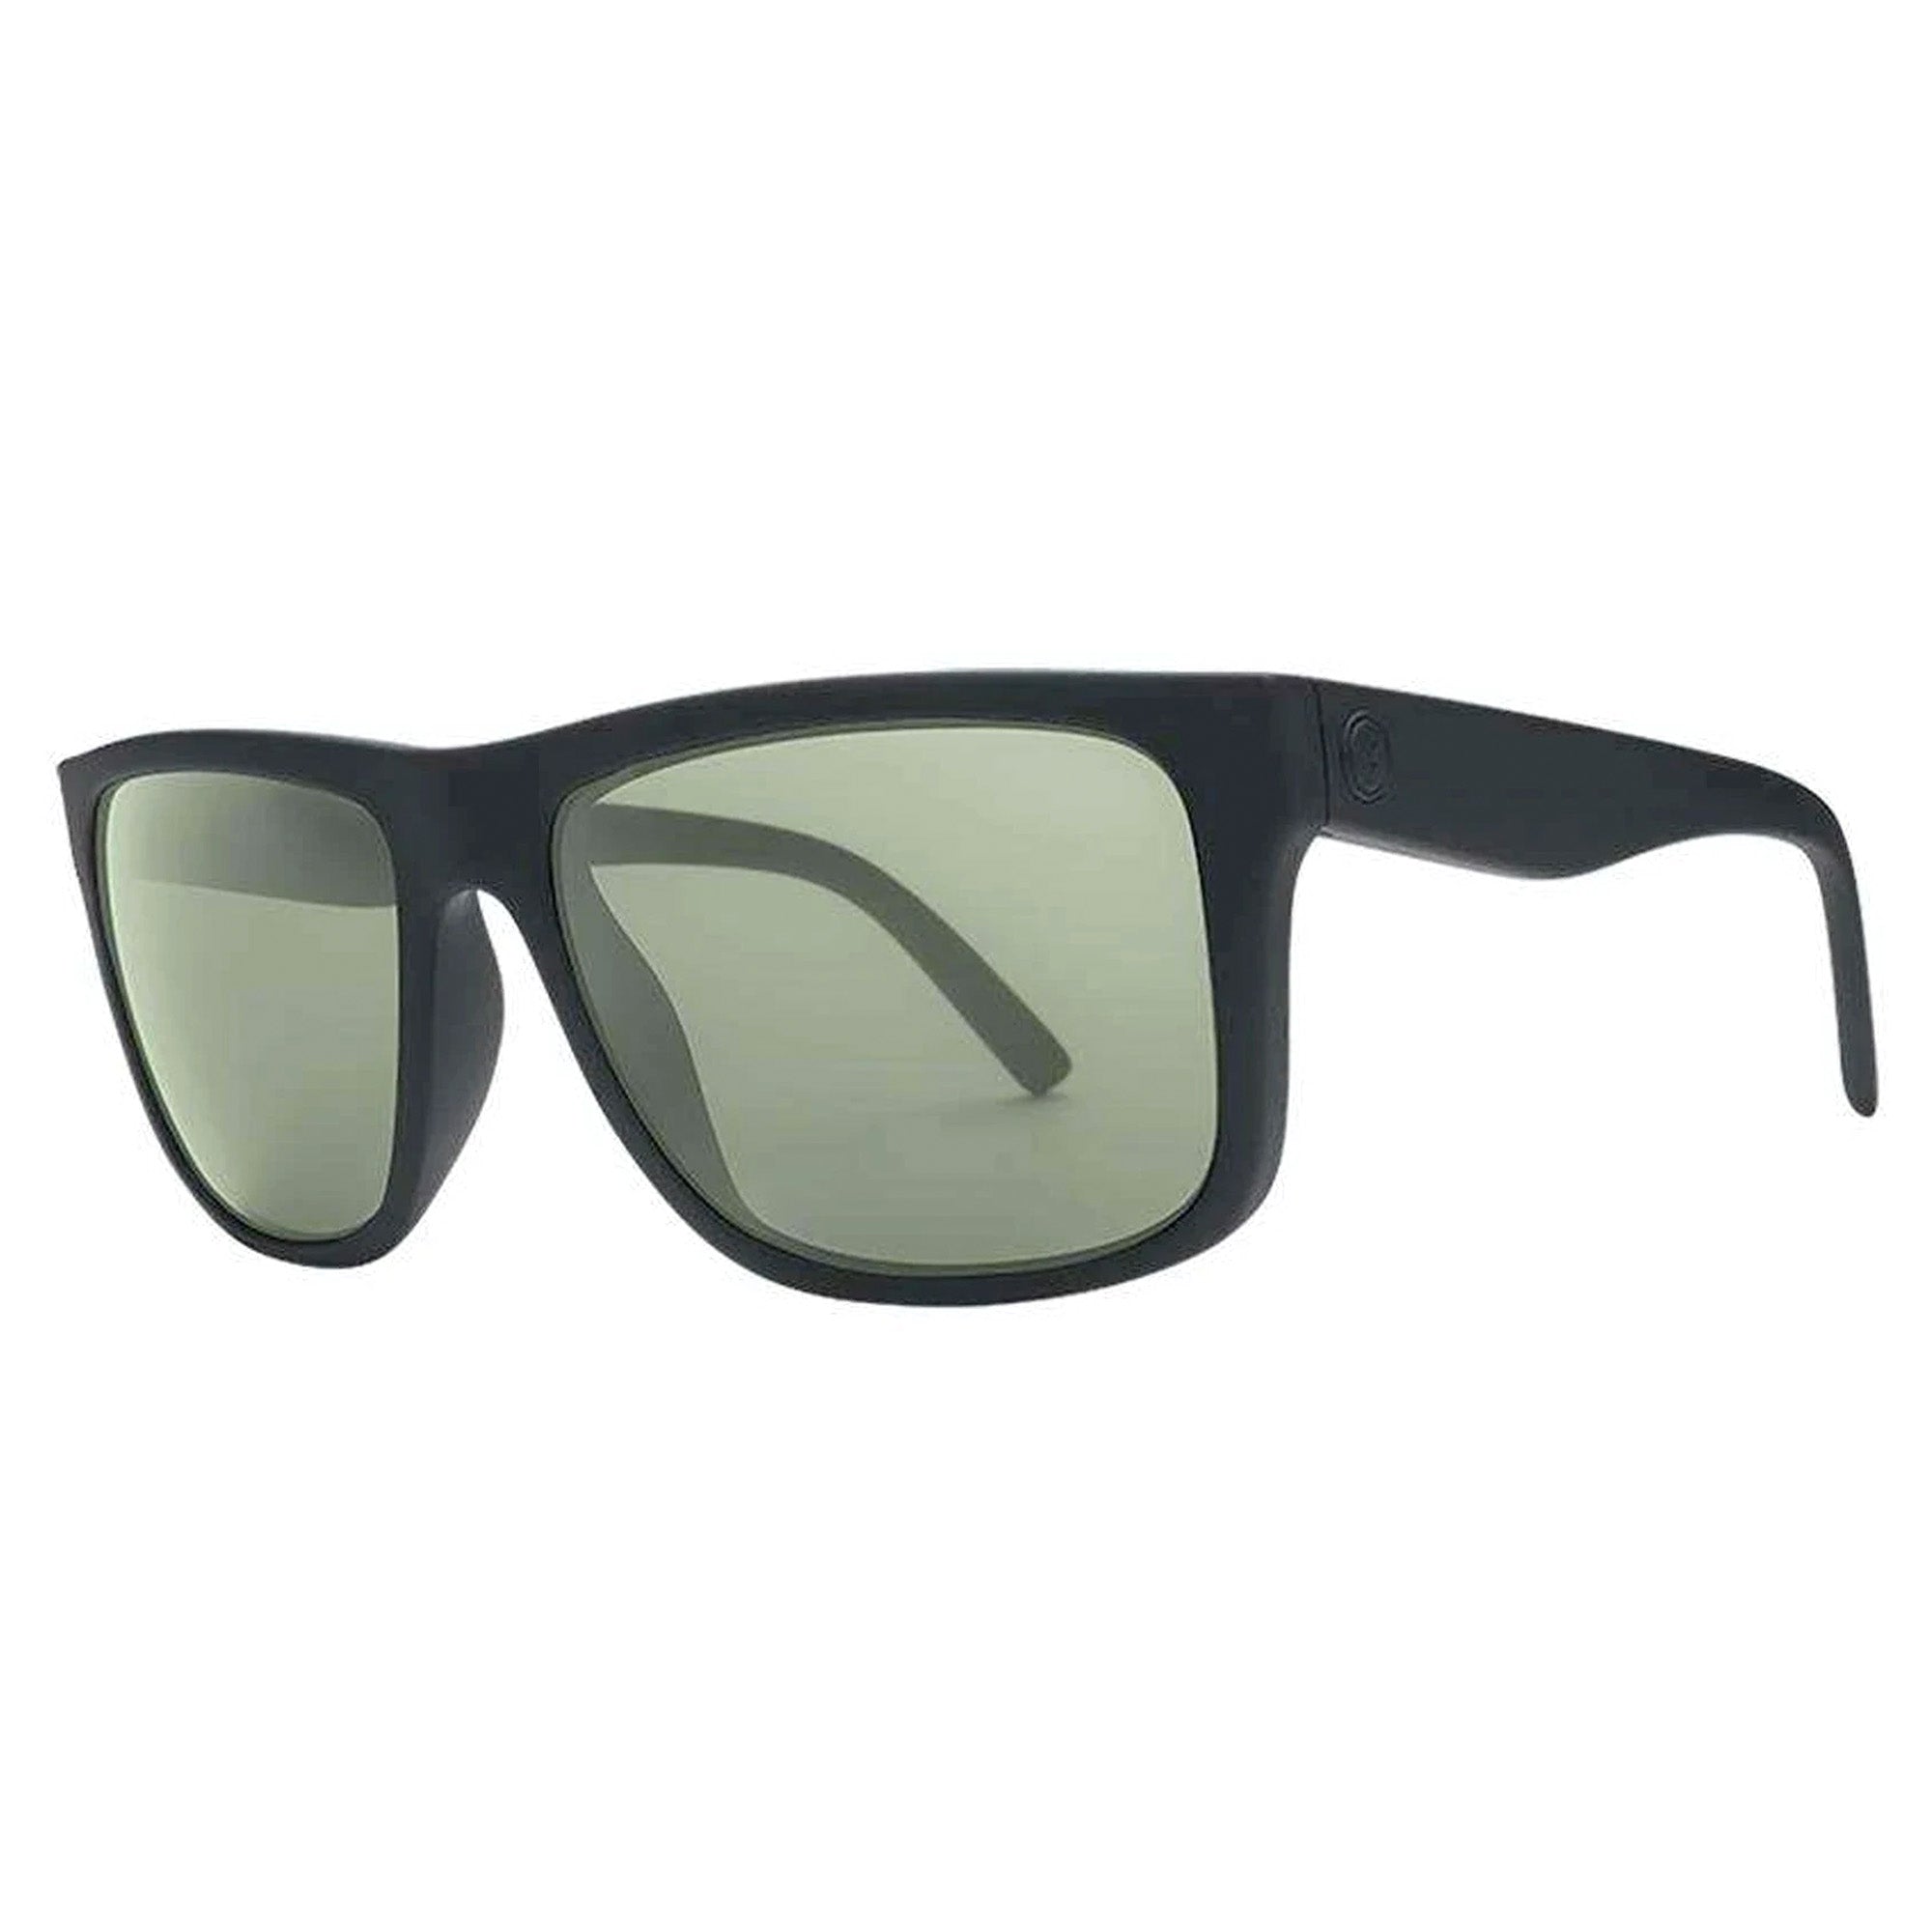 Electric Swingarm XL Men's Polarized Sunglasses